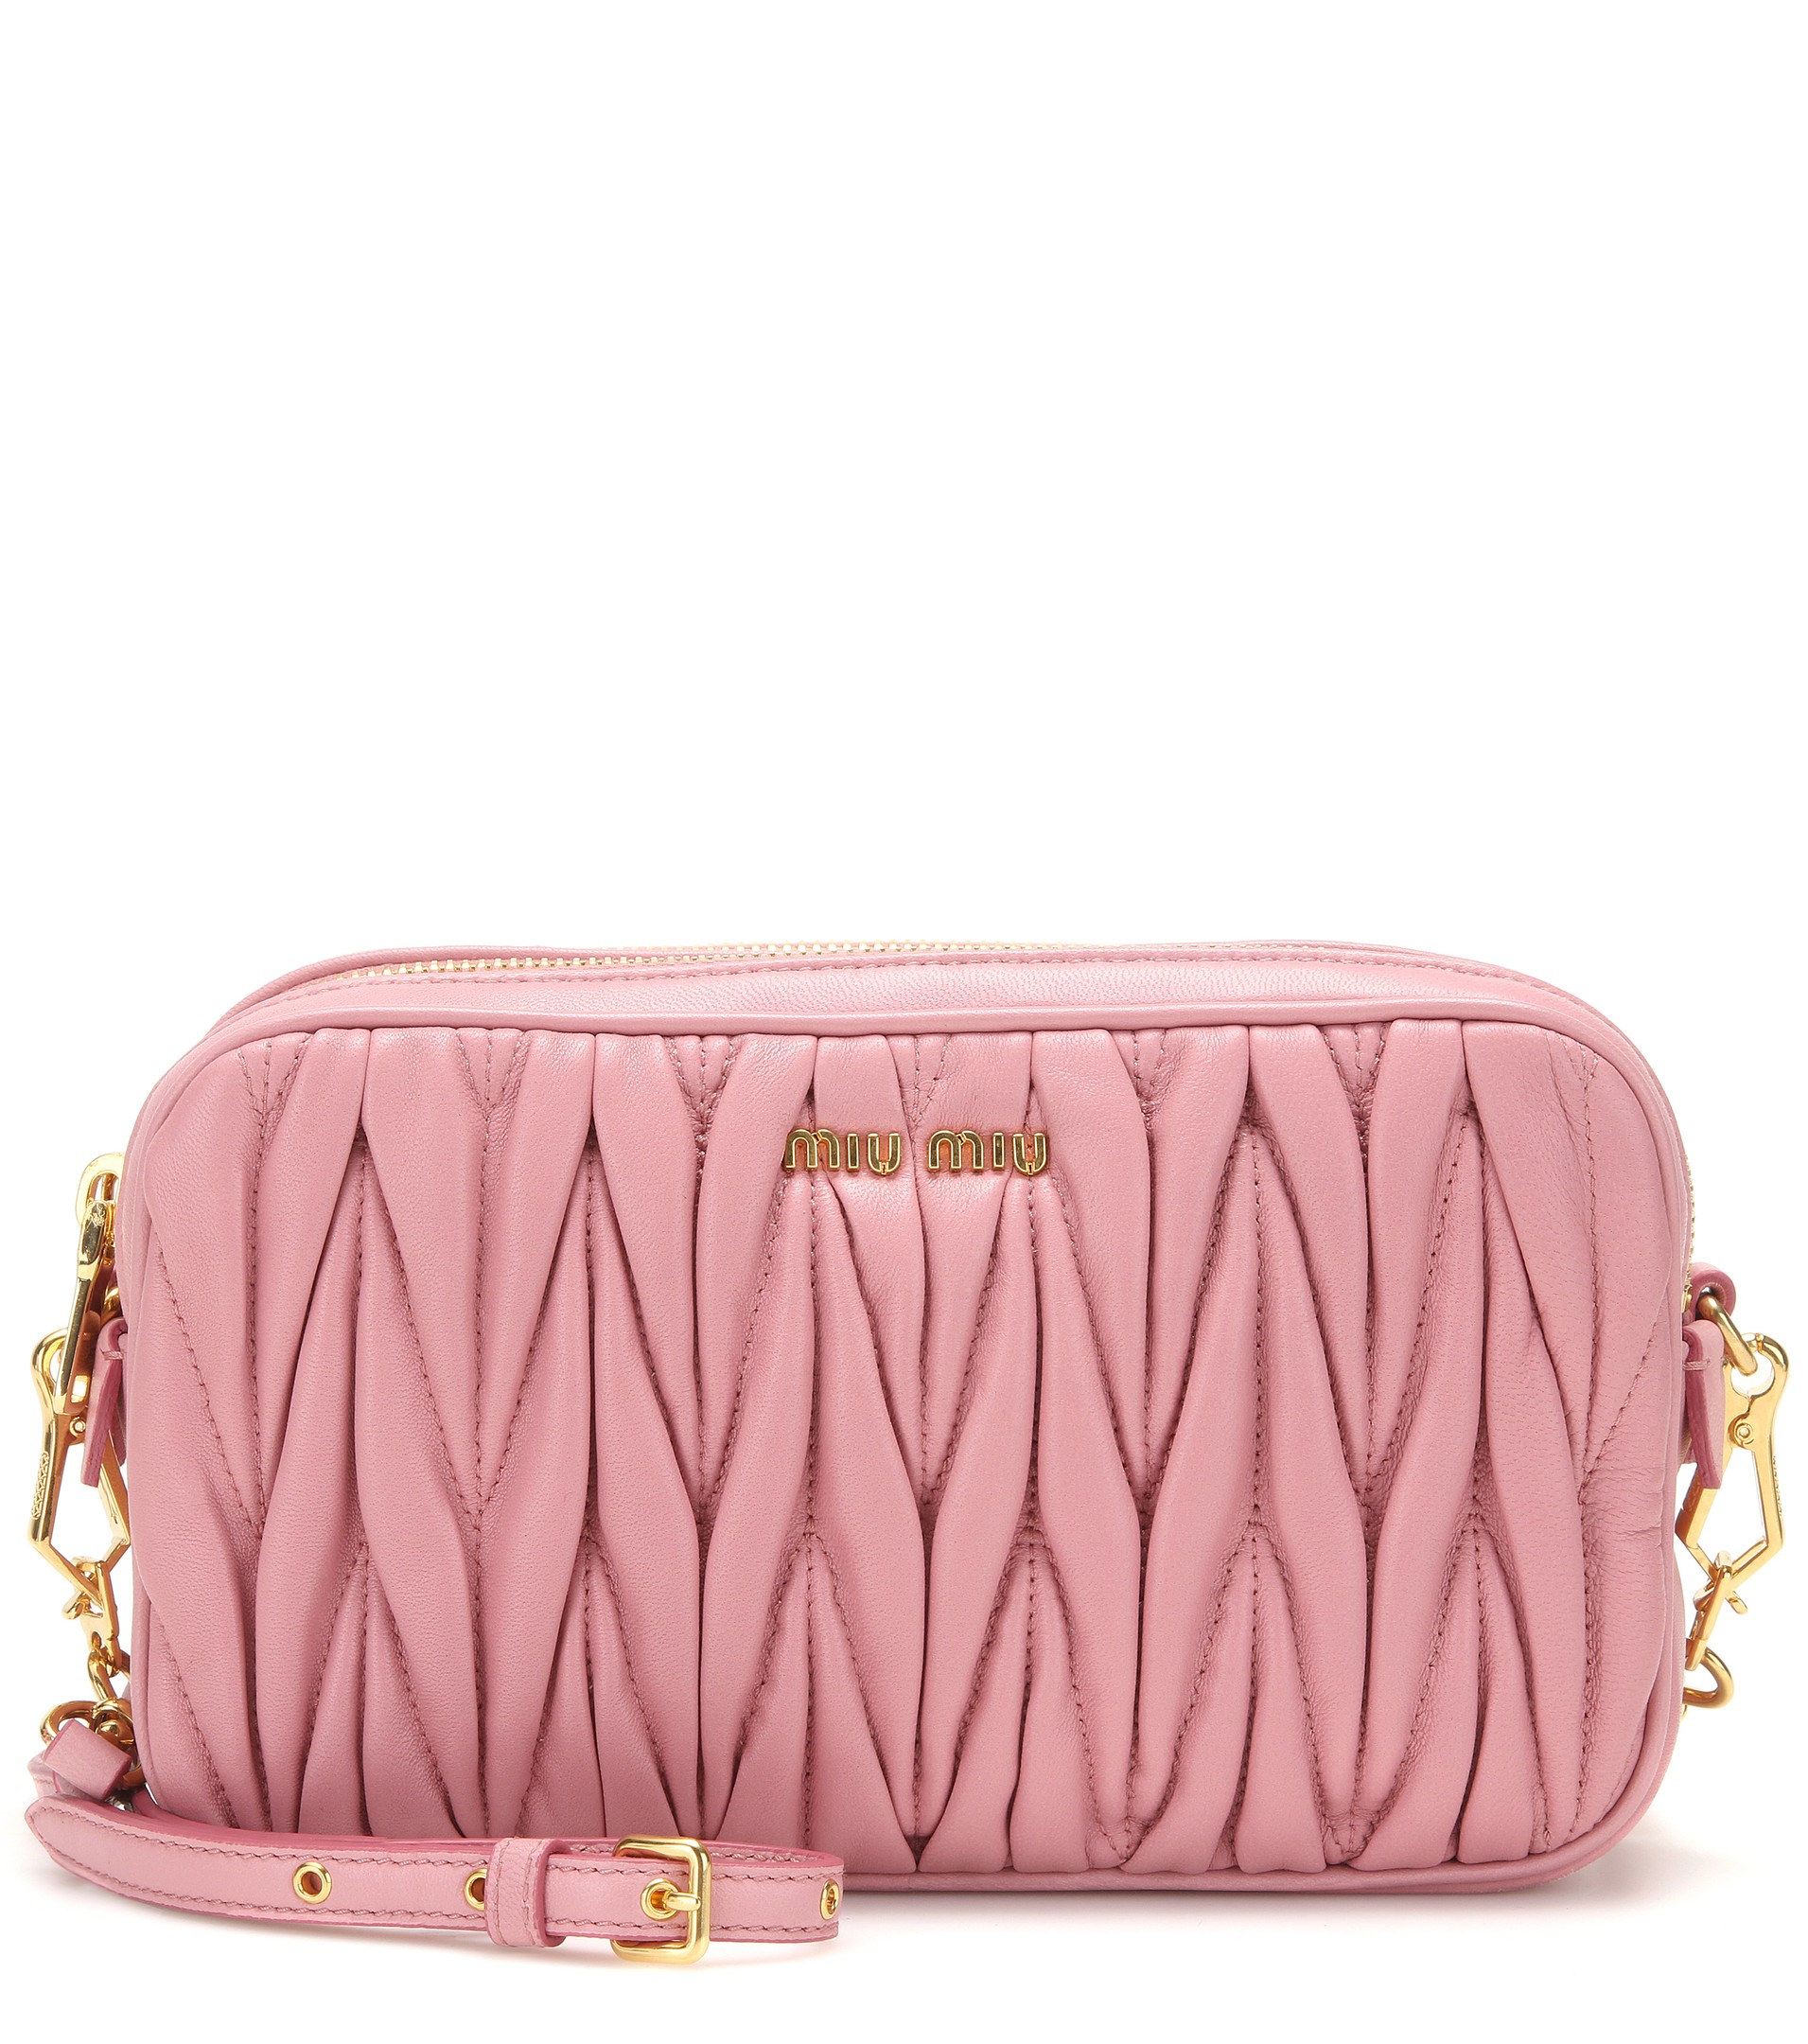 Miu Miu Matelassé Leather Shoulder Bag in Pink | Lyst